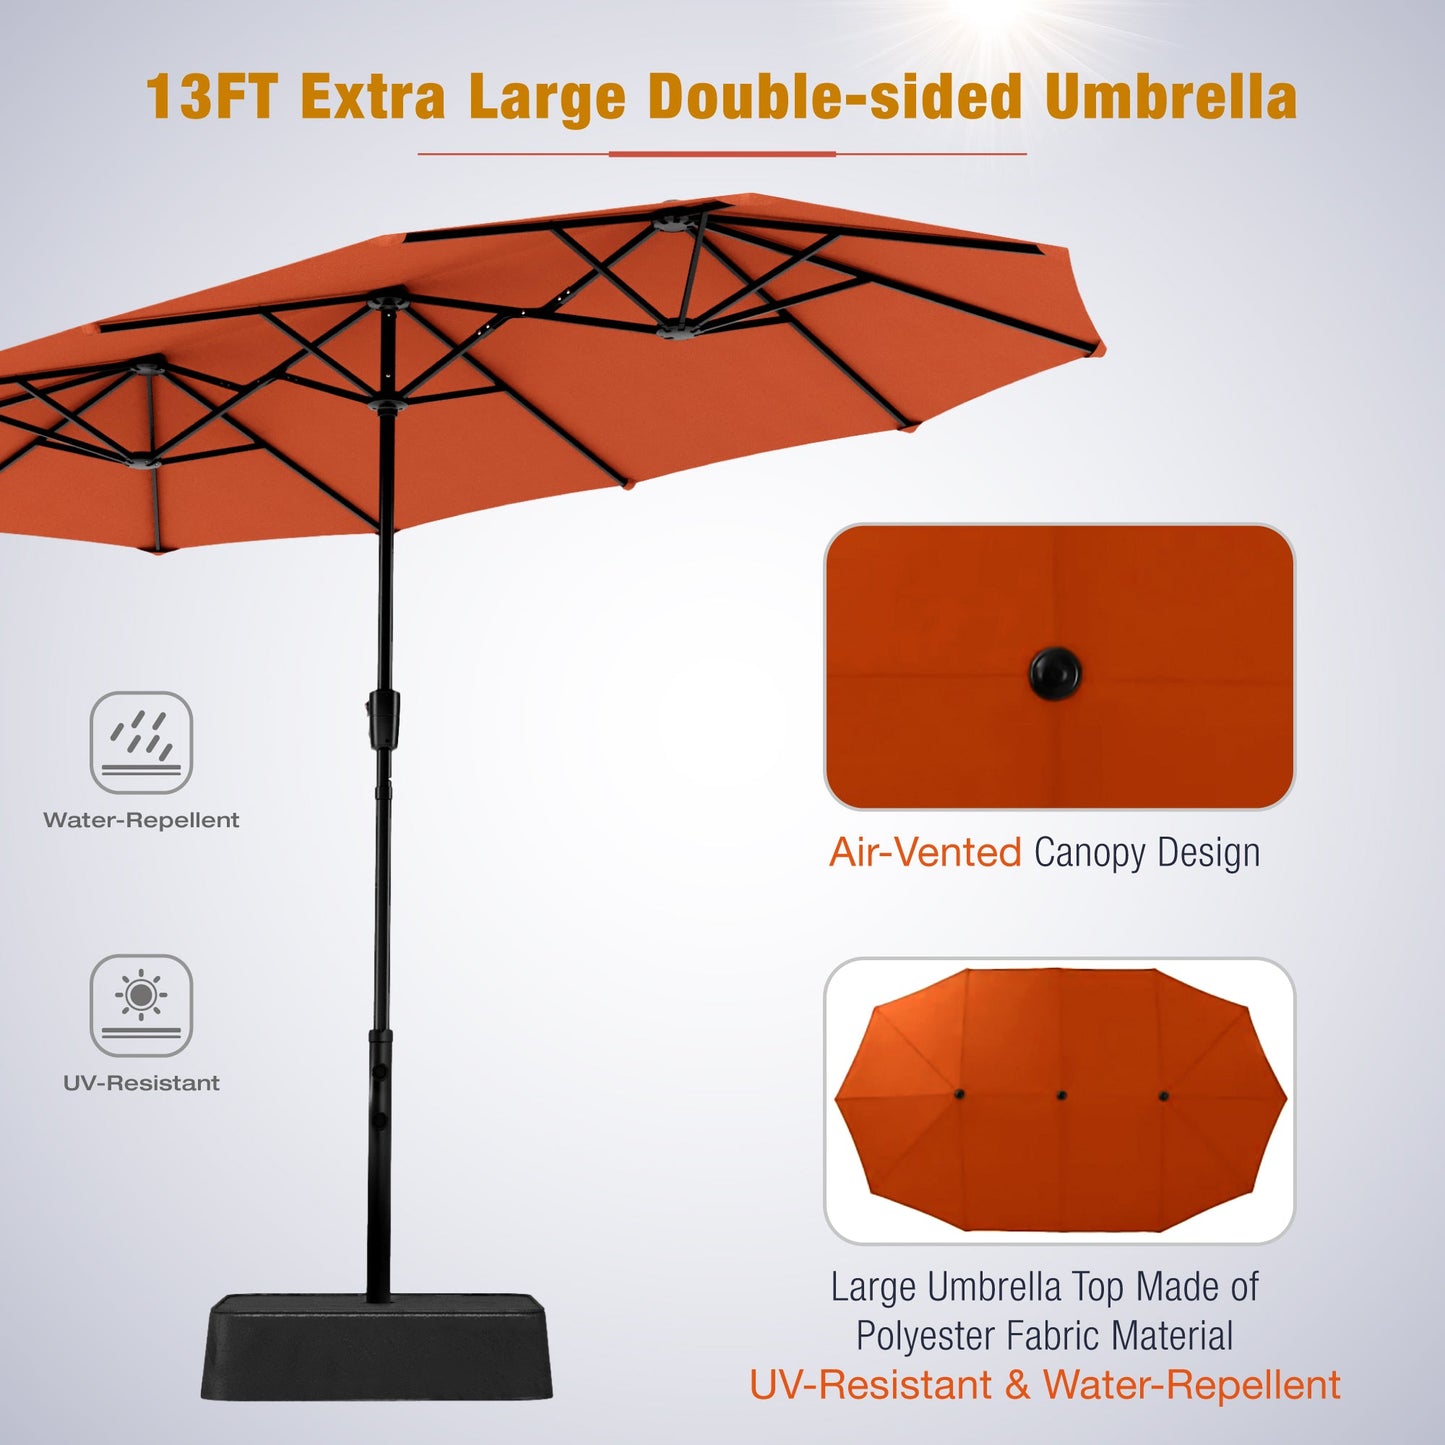 Sophia & William 8-Piece Outdoor Patio Set with 13 ft Umbrella, Rattan Chairs & Rectangle Table for 6, Orange Red Umbrella